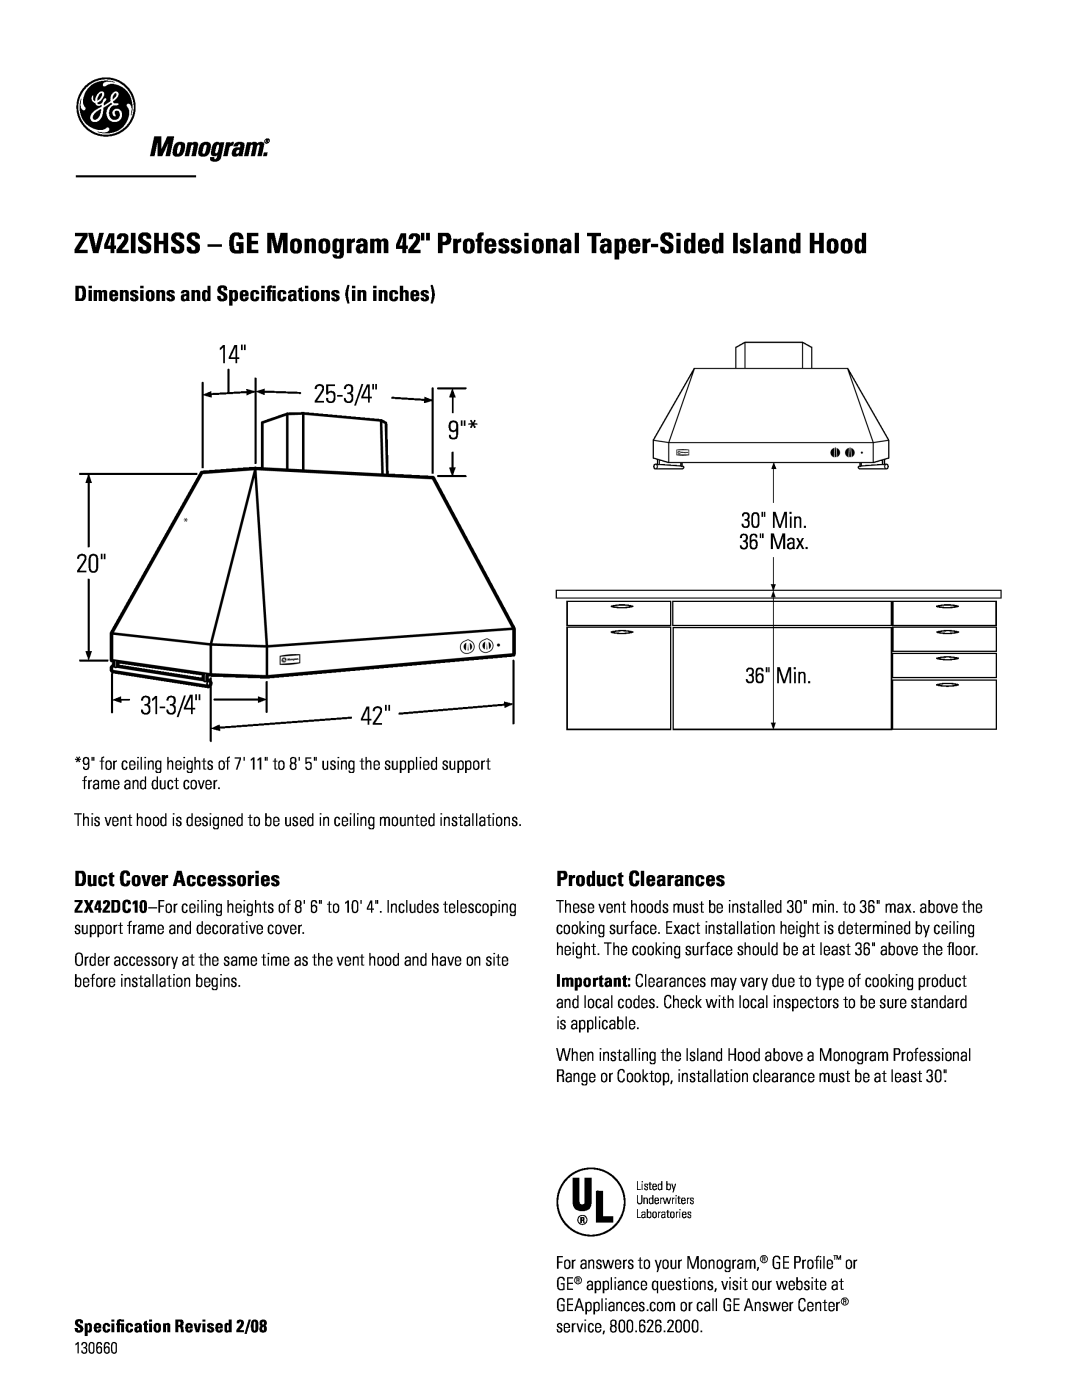 GE Monogram ZX42DC10 dimensions zv42ishss - GE Monogram 42 Professional Taper-Sided Island Hood, 25-3/4, 31-3/4 